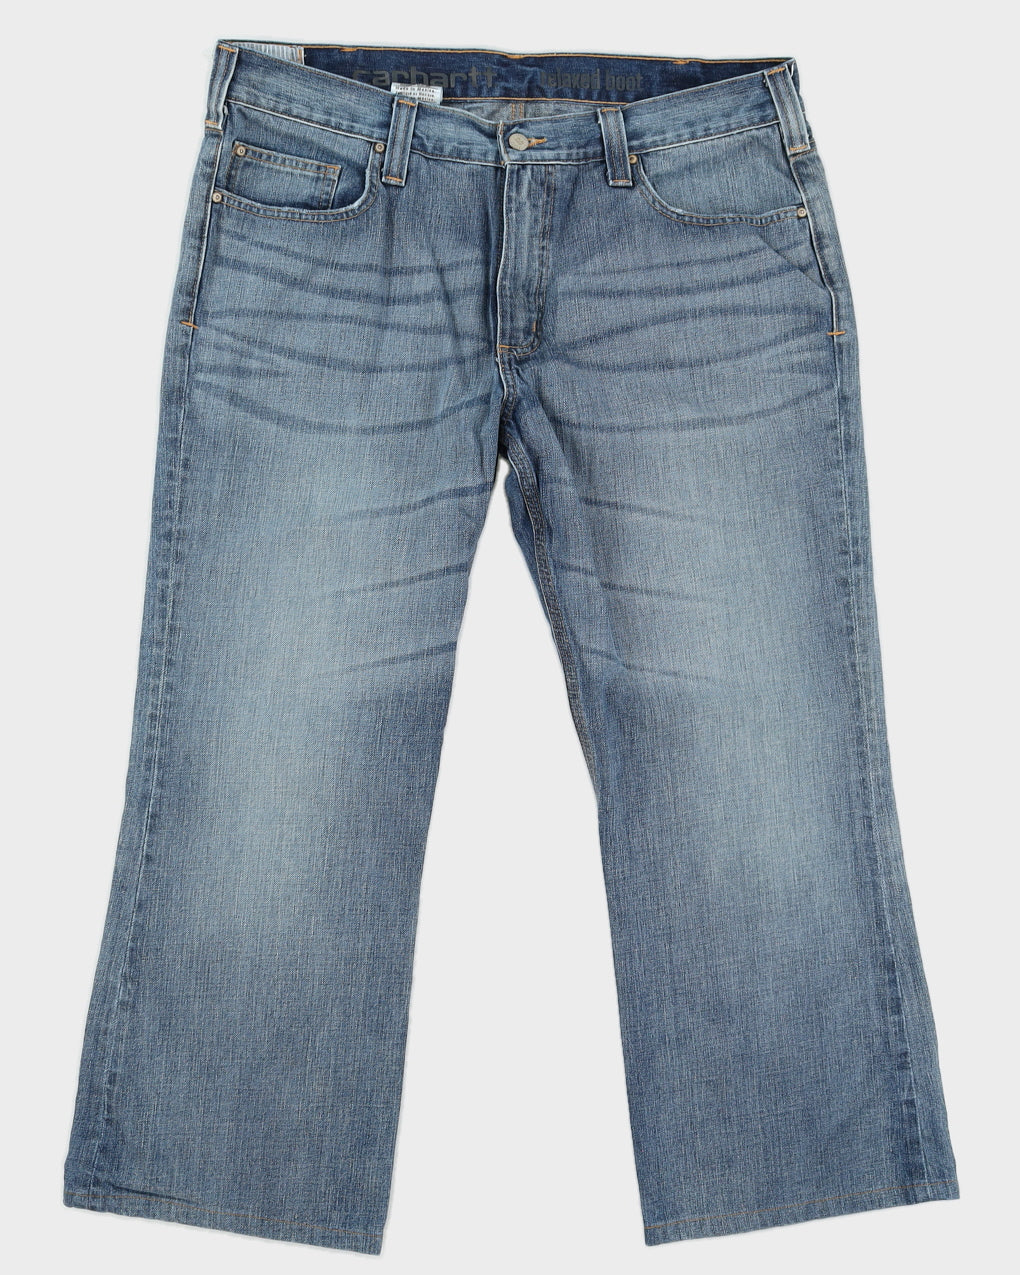 Y2K 00s Carhartt Denim Jeans - W38 L30